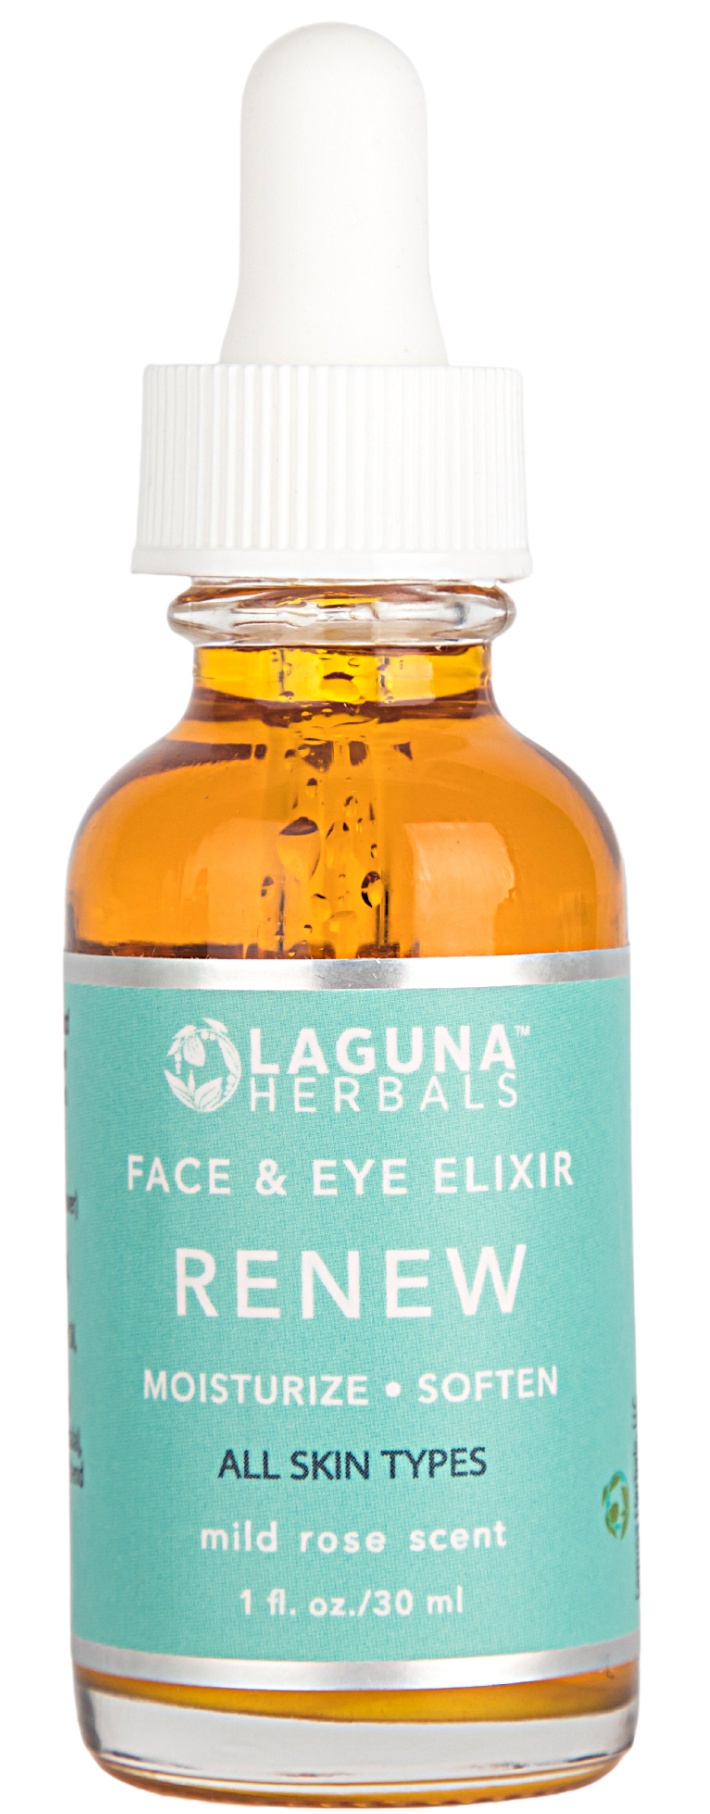 Laguna Herbals Renew Face And Eye Elixir